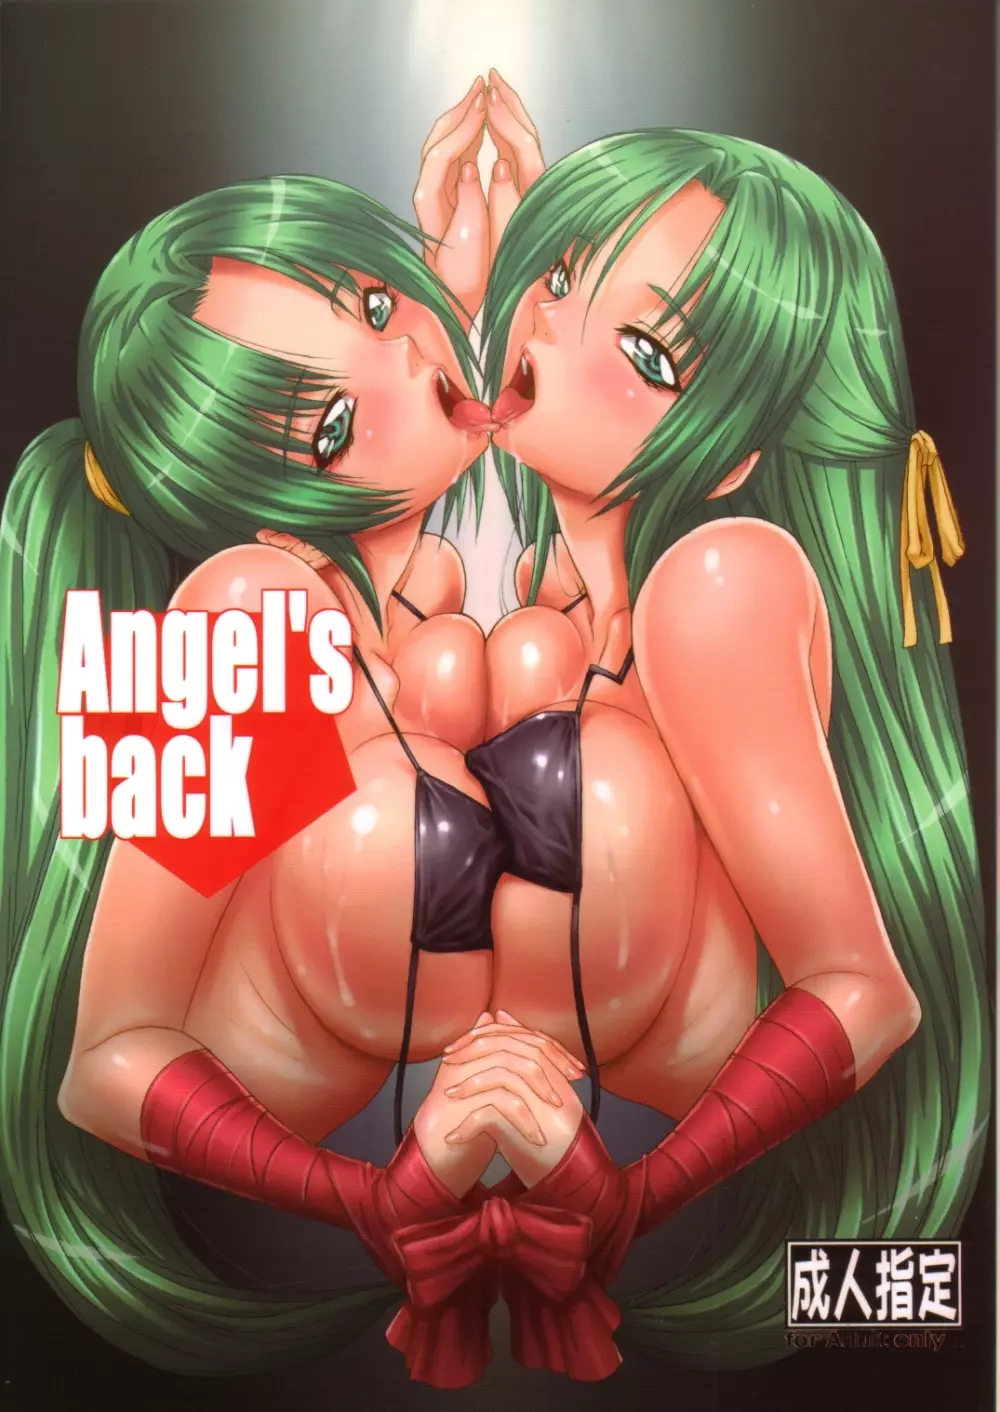 Angel’s back